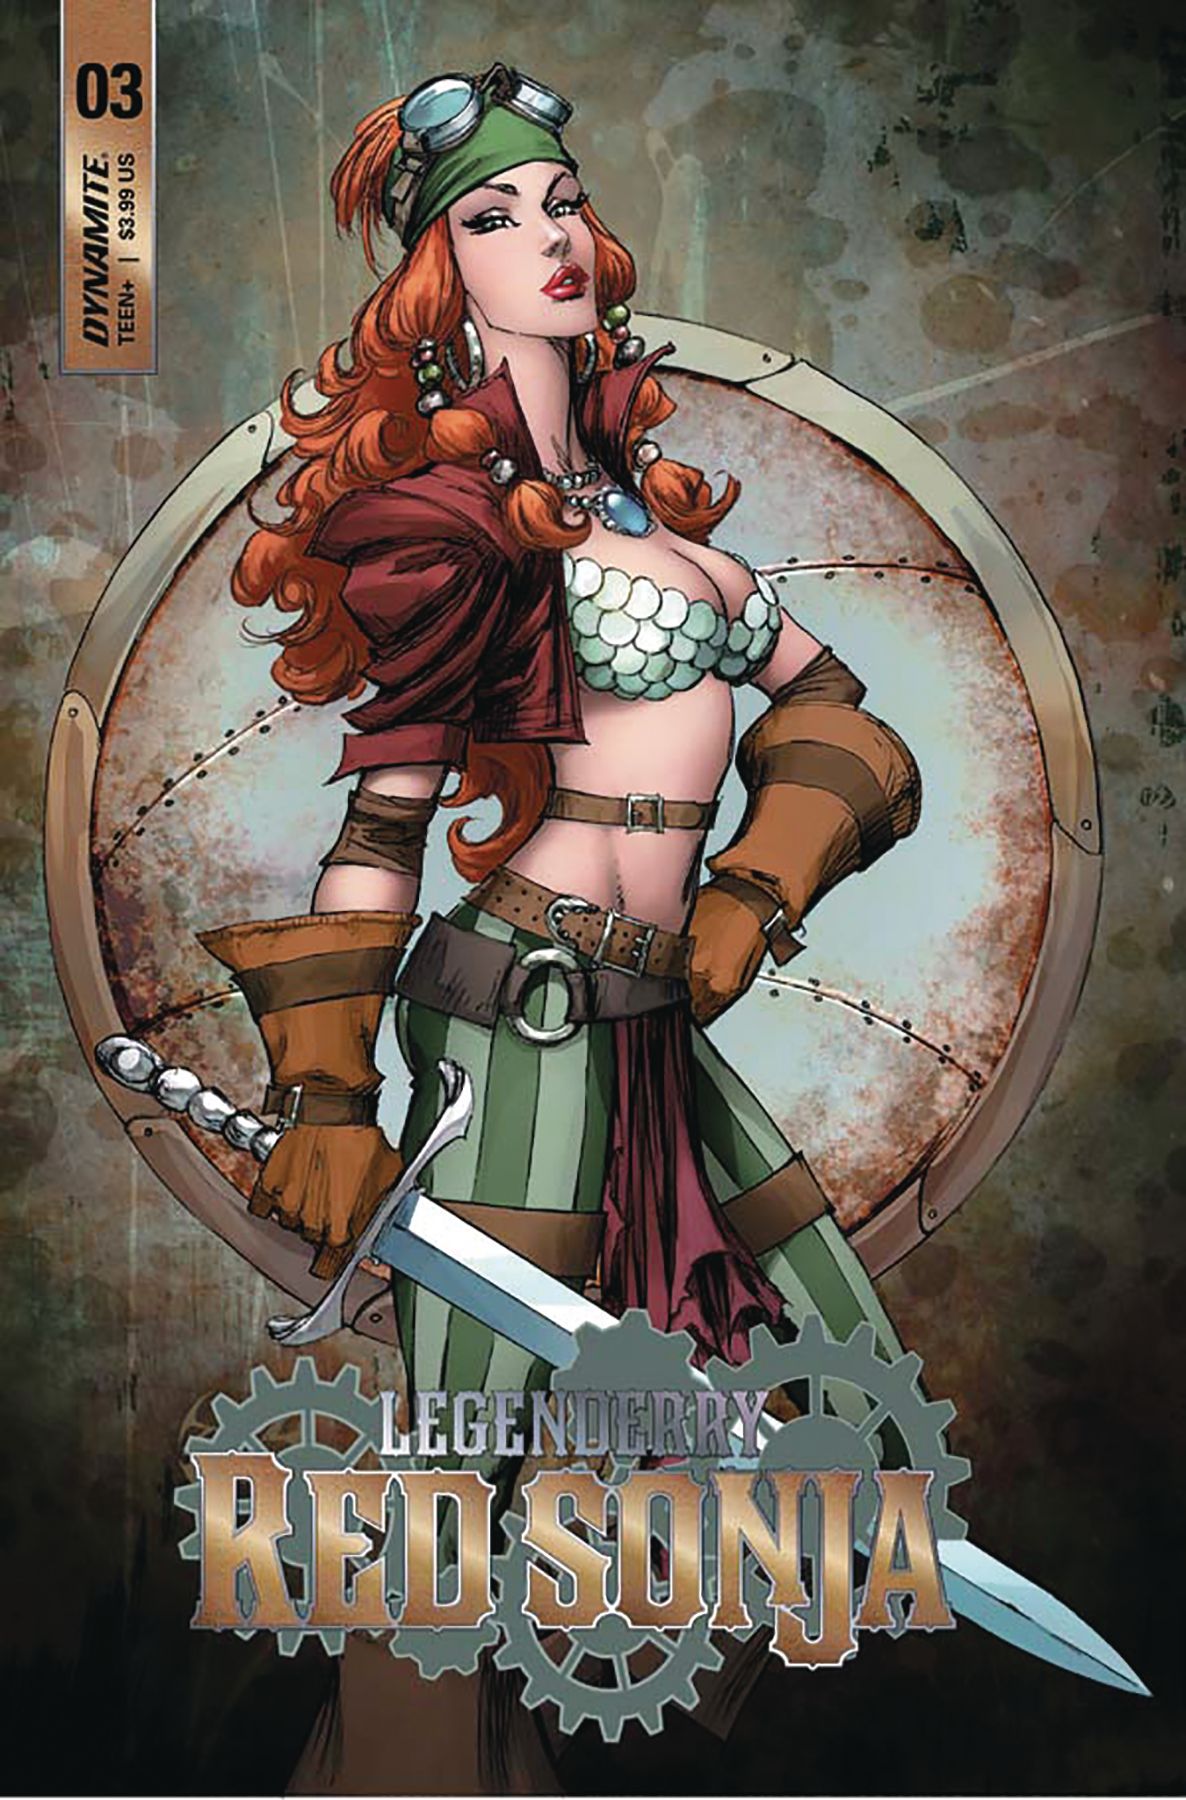 Legenderry Red Sonja #3 Comic